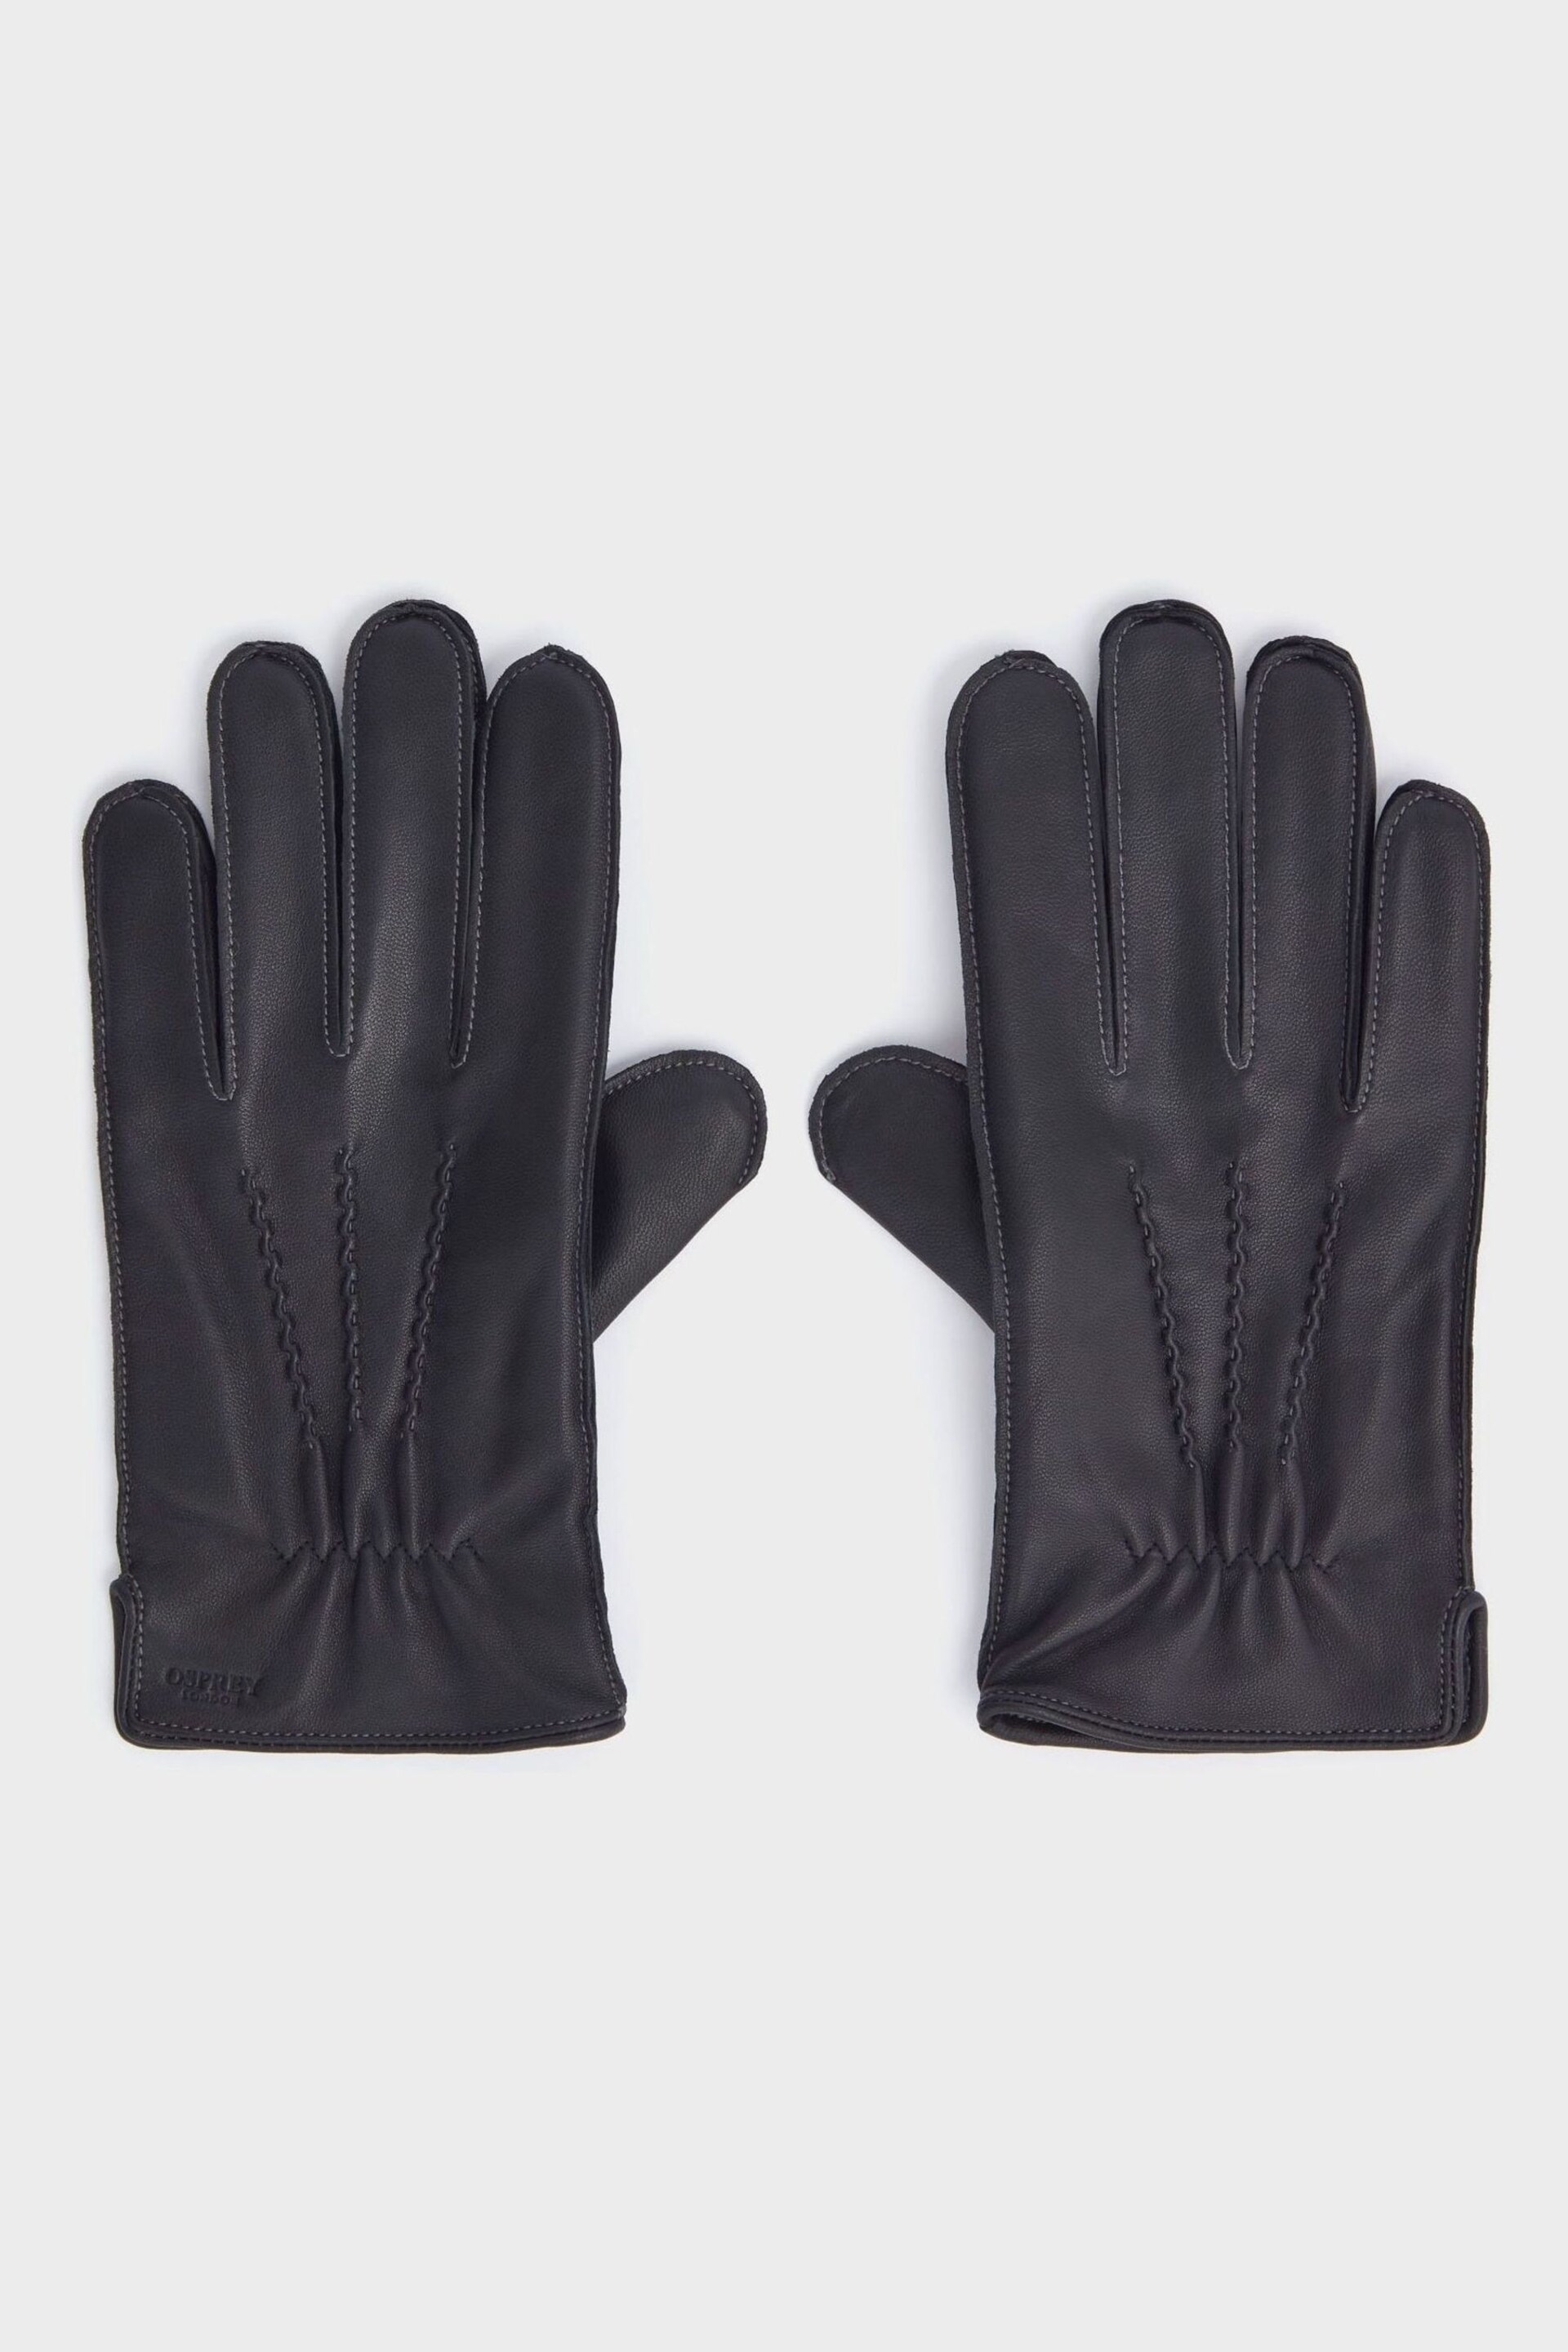 Osprey London The Harvey Leather Gloves - Image 3 of 5